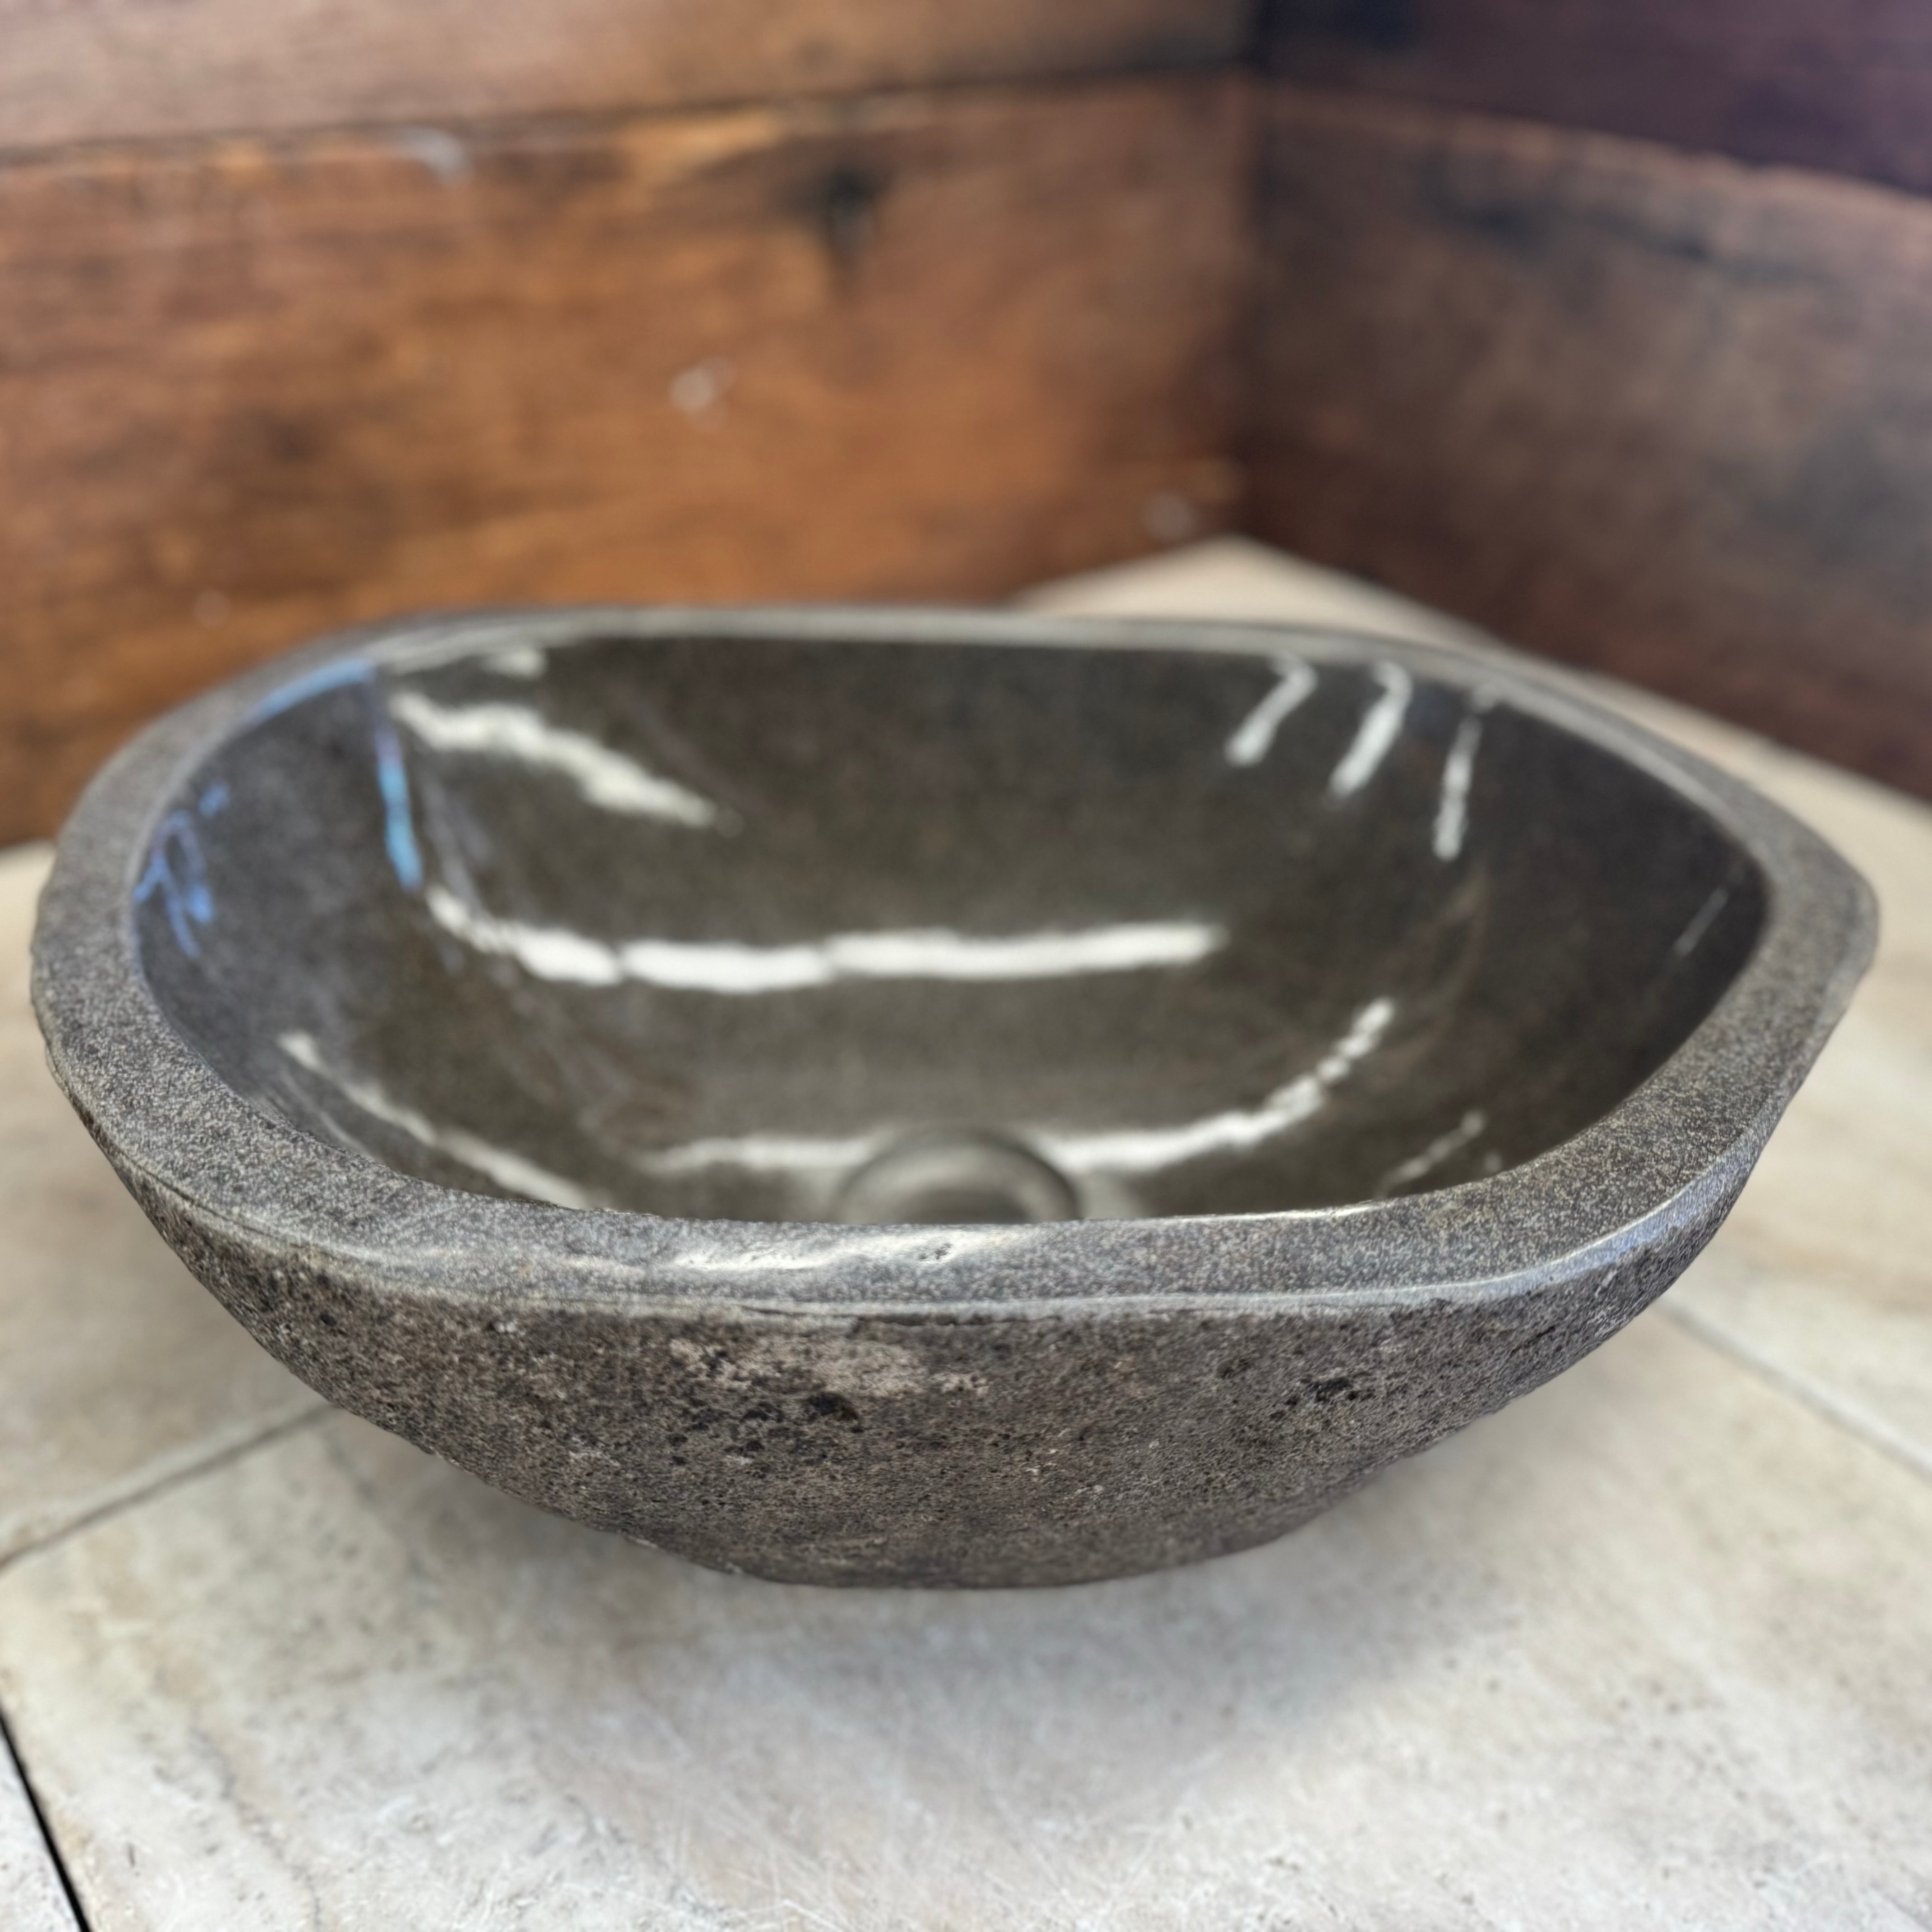 Handmade Natural Oval River Stone Bathroom Basin - RM2306152